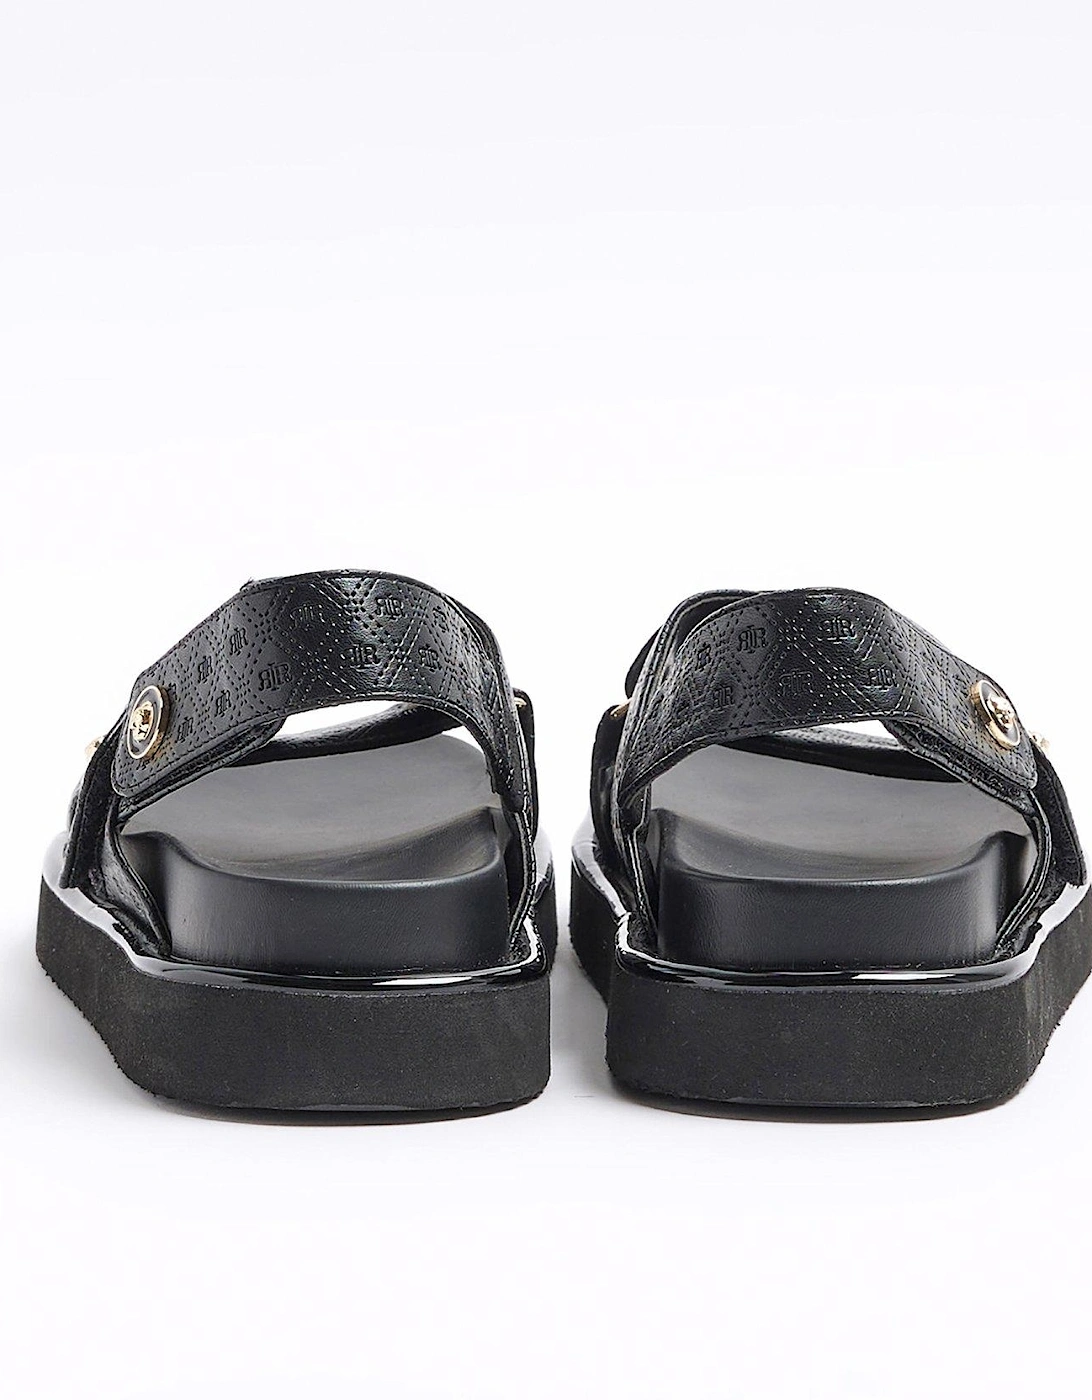 Cross Strap Embossed Sandals - Black